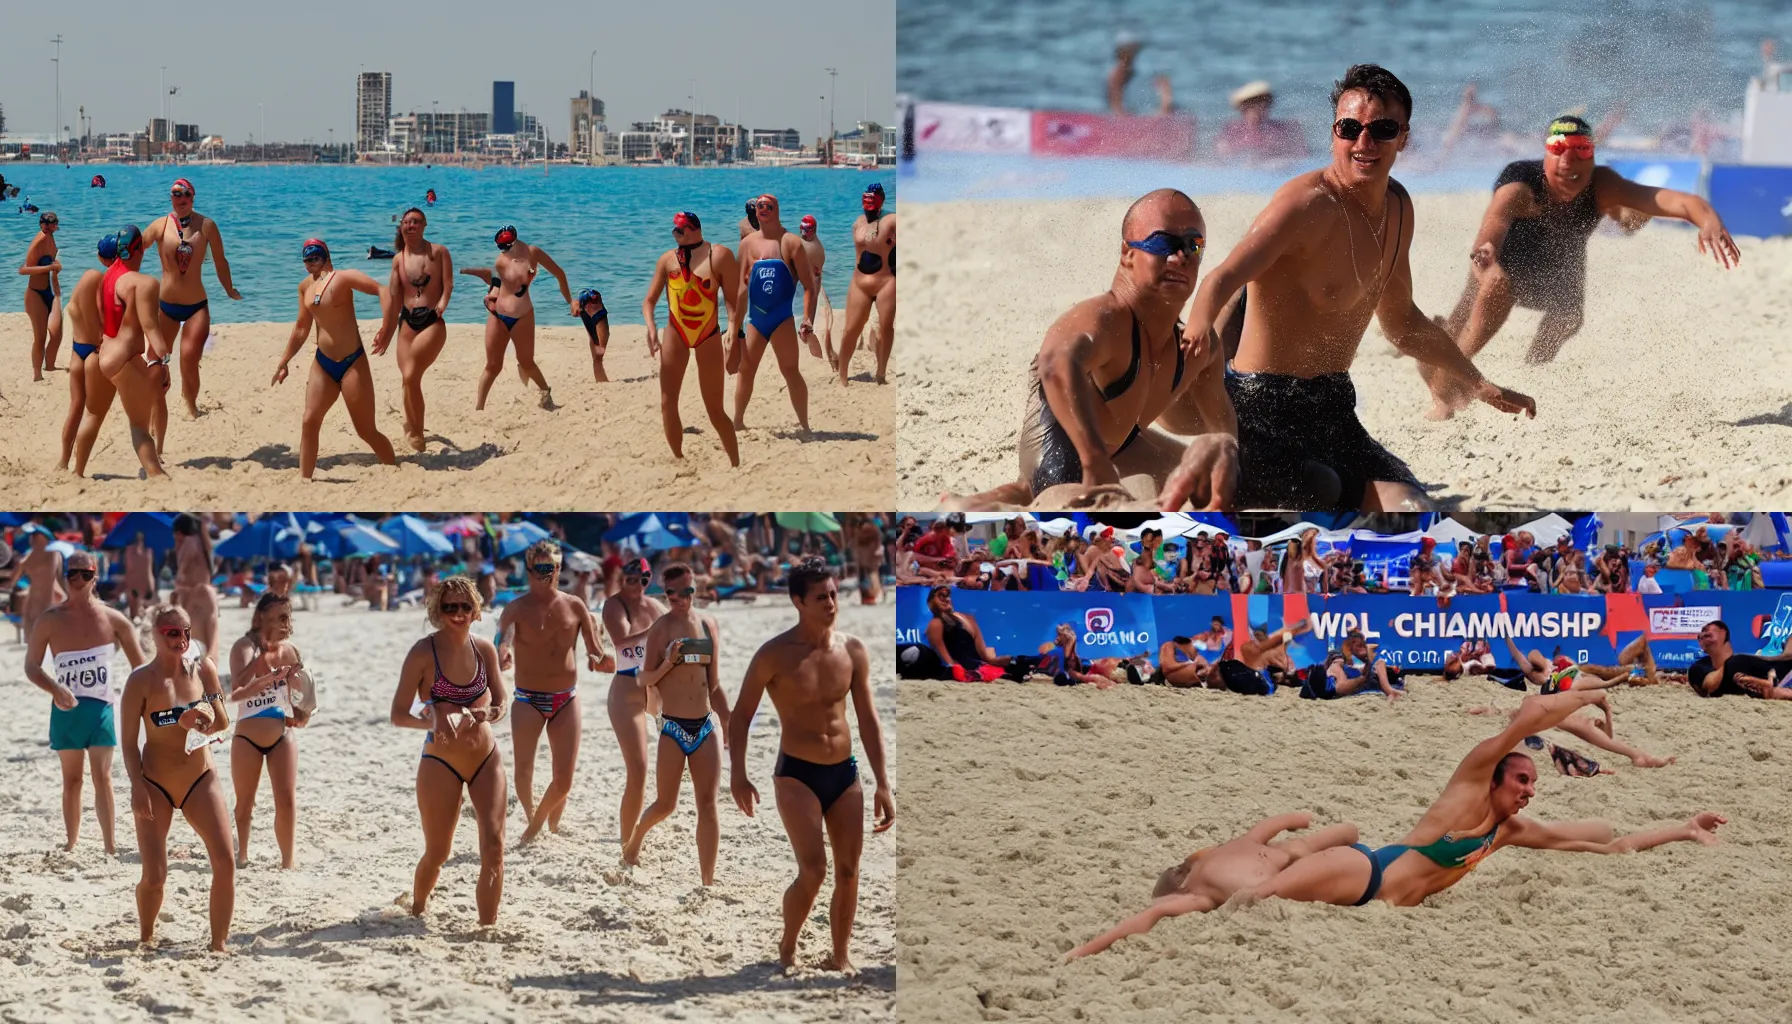 Prompt: sand swimmimg world championship